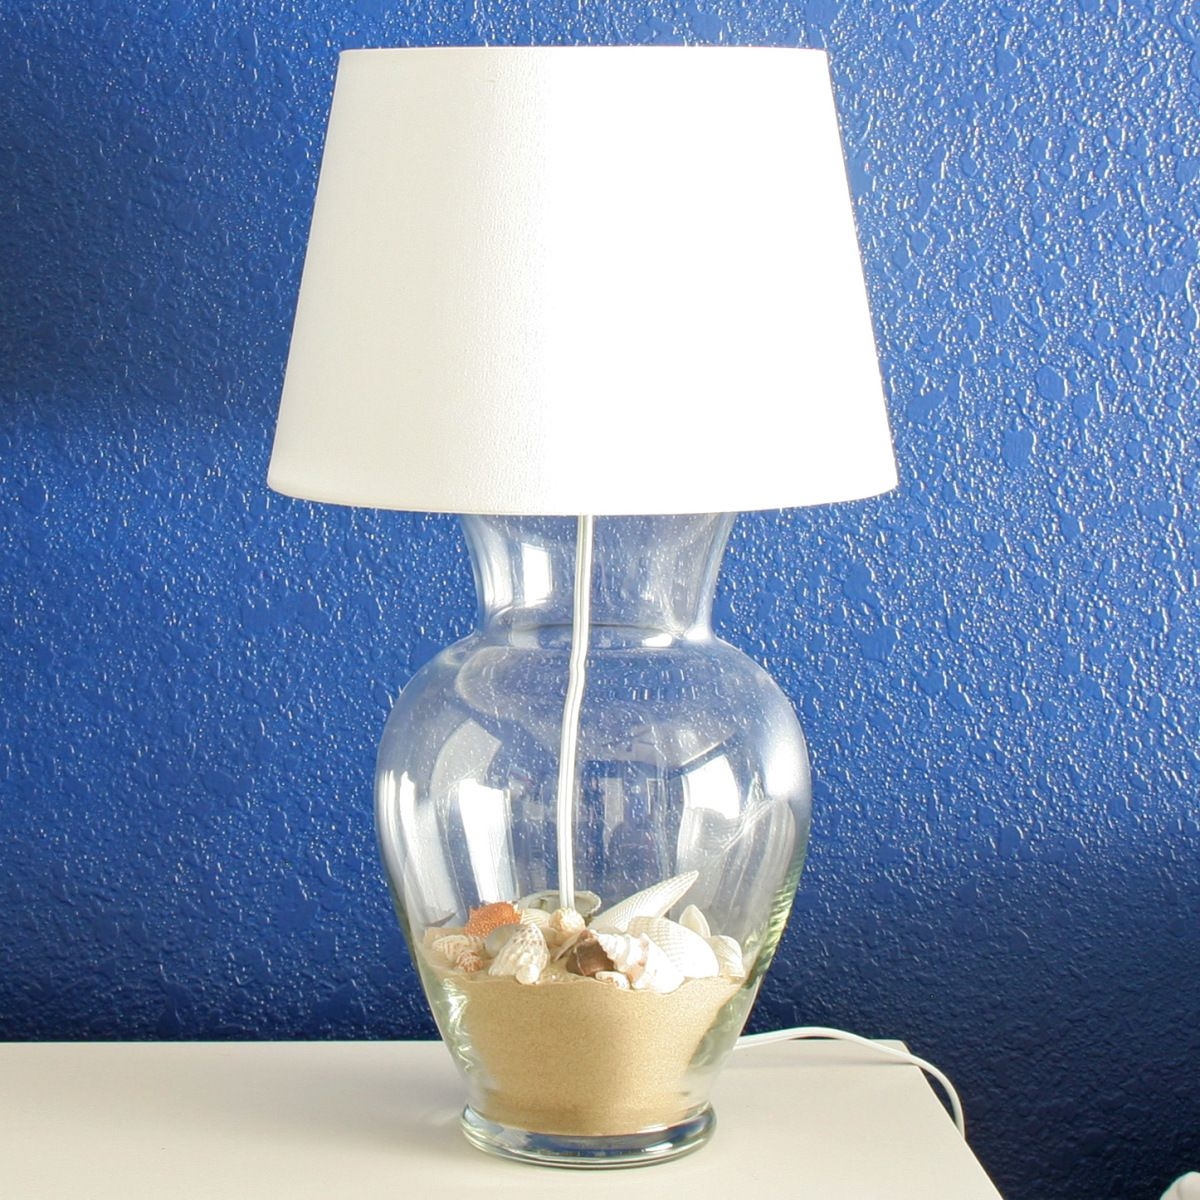 Seaglass lamp